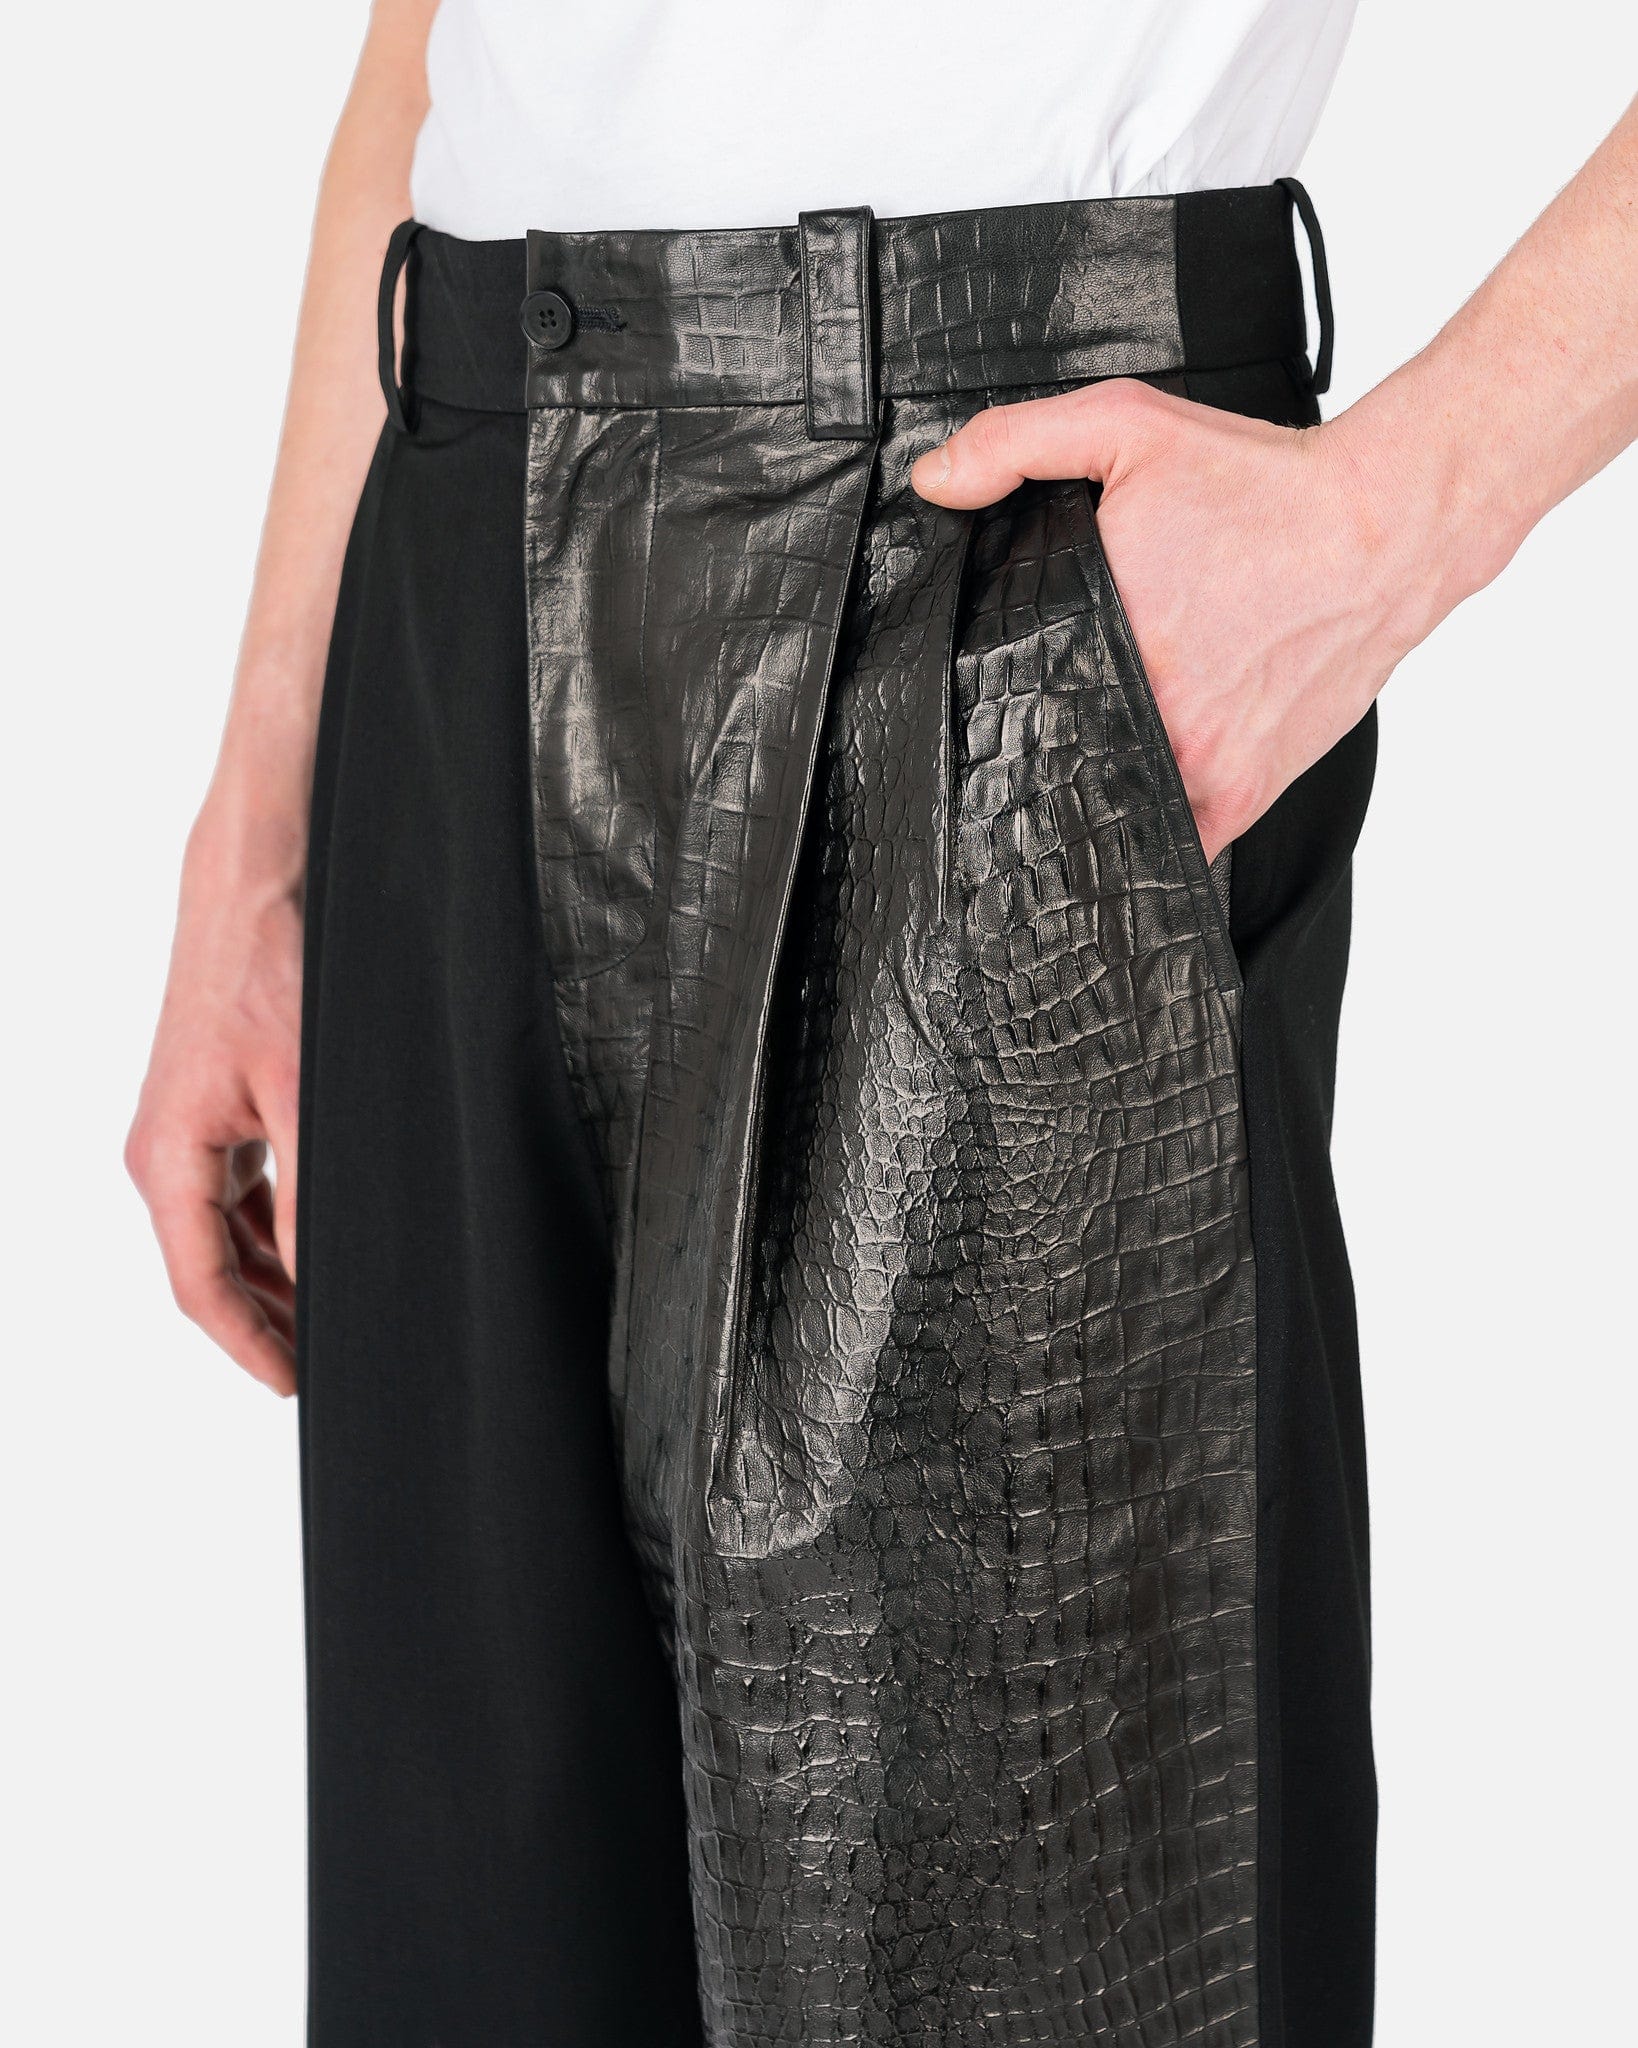 Feng Chen Wang Men's Pants Half Faux Leather Trousers in Black